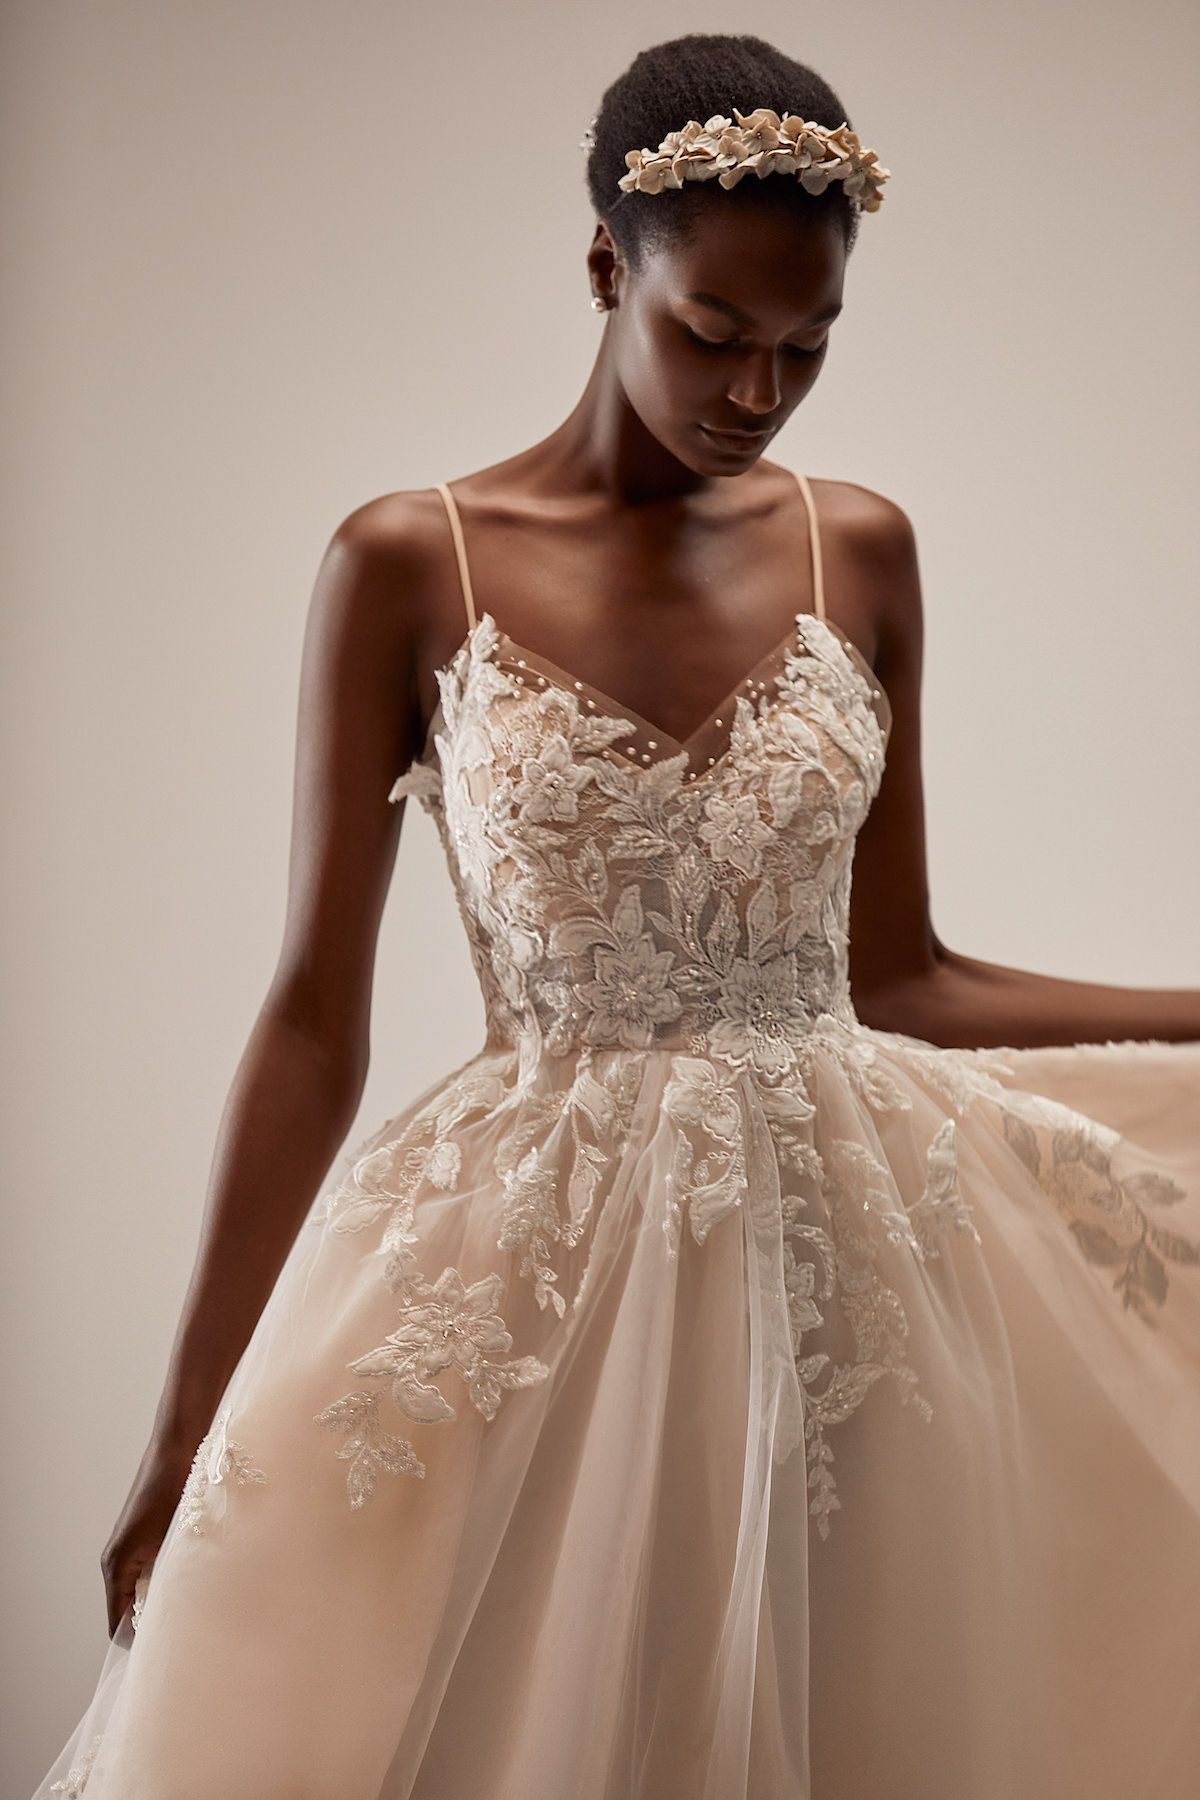 Princes Wedding Dress by Milla Nova - Carolina white lace